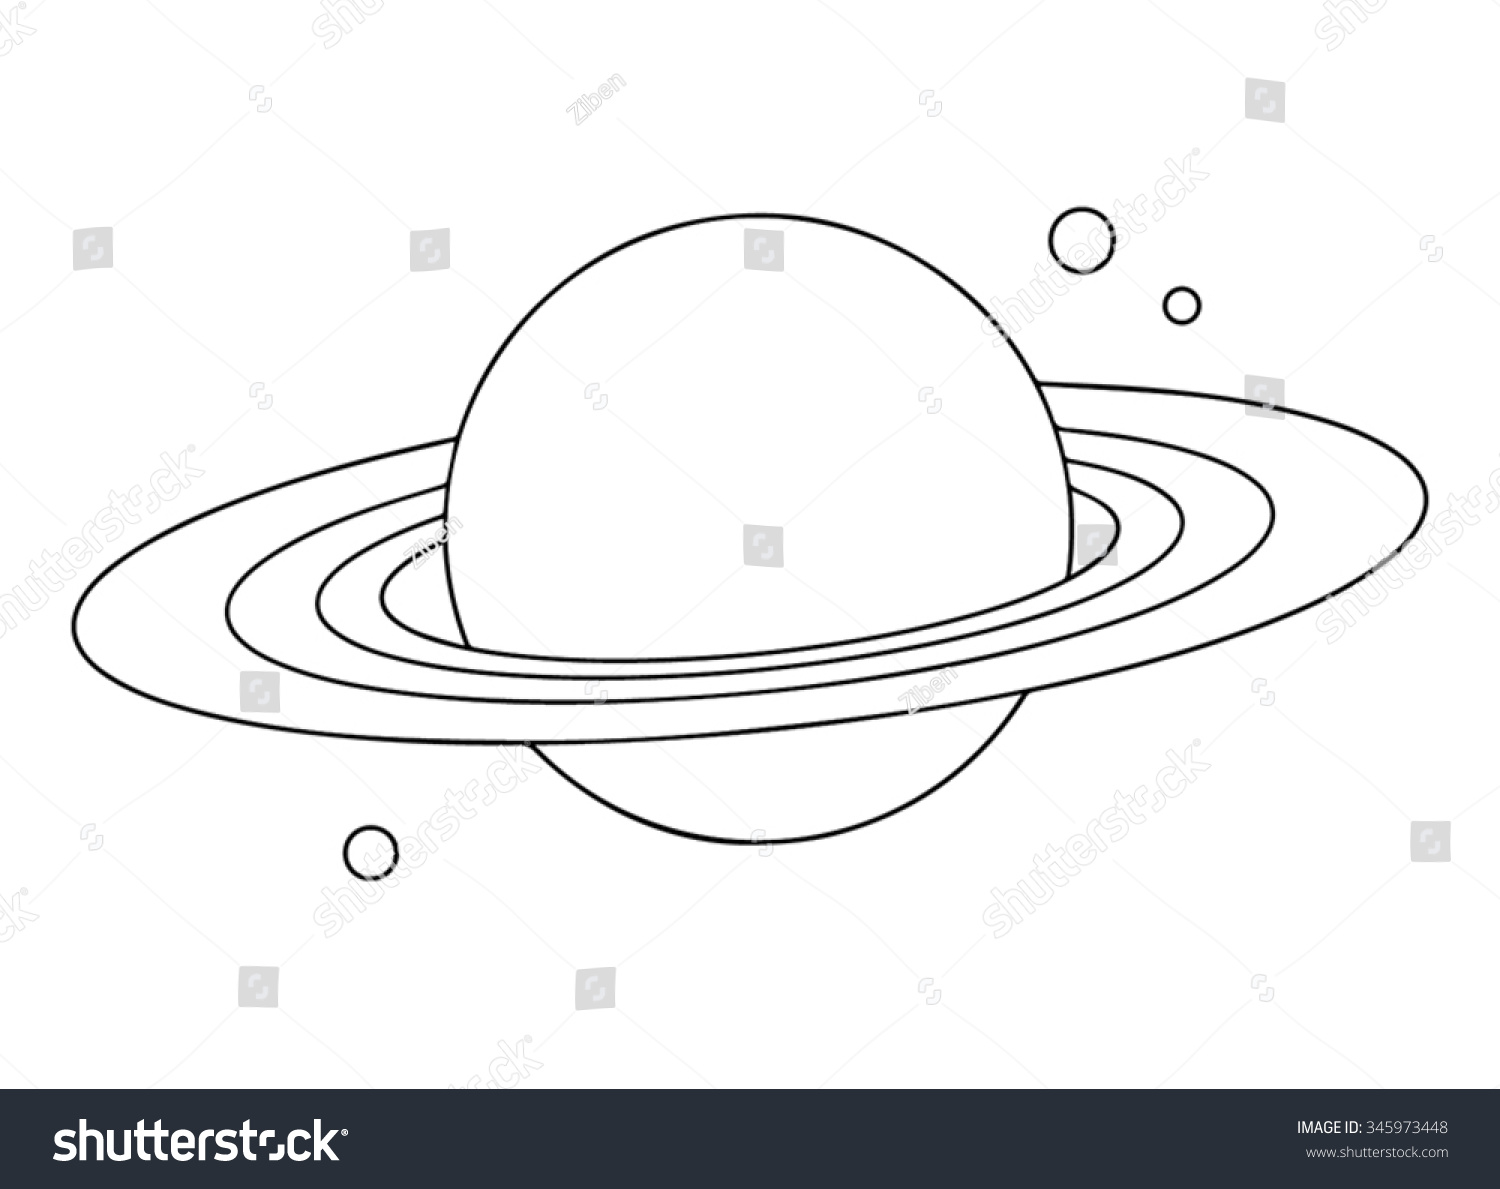 Раскраска Сатурна с кольцами